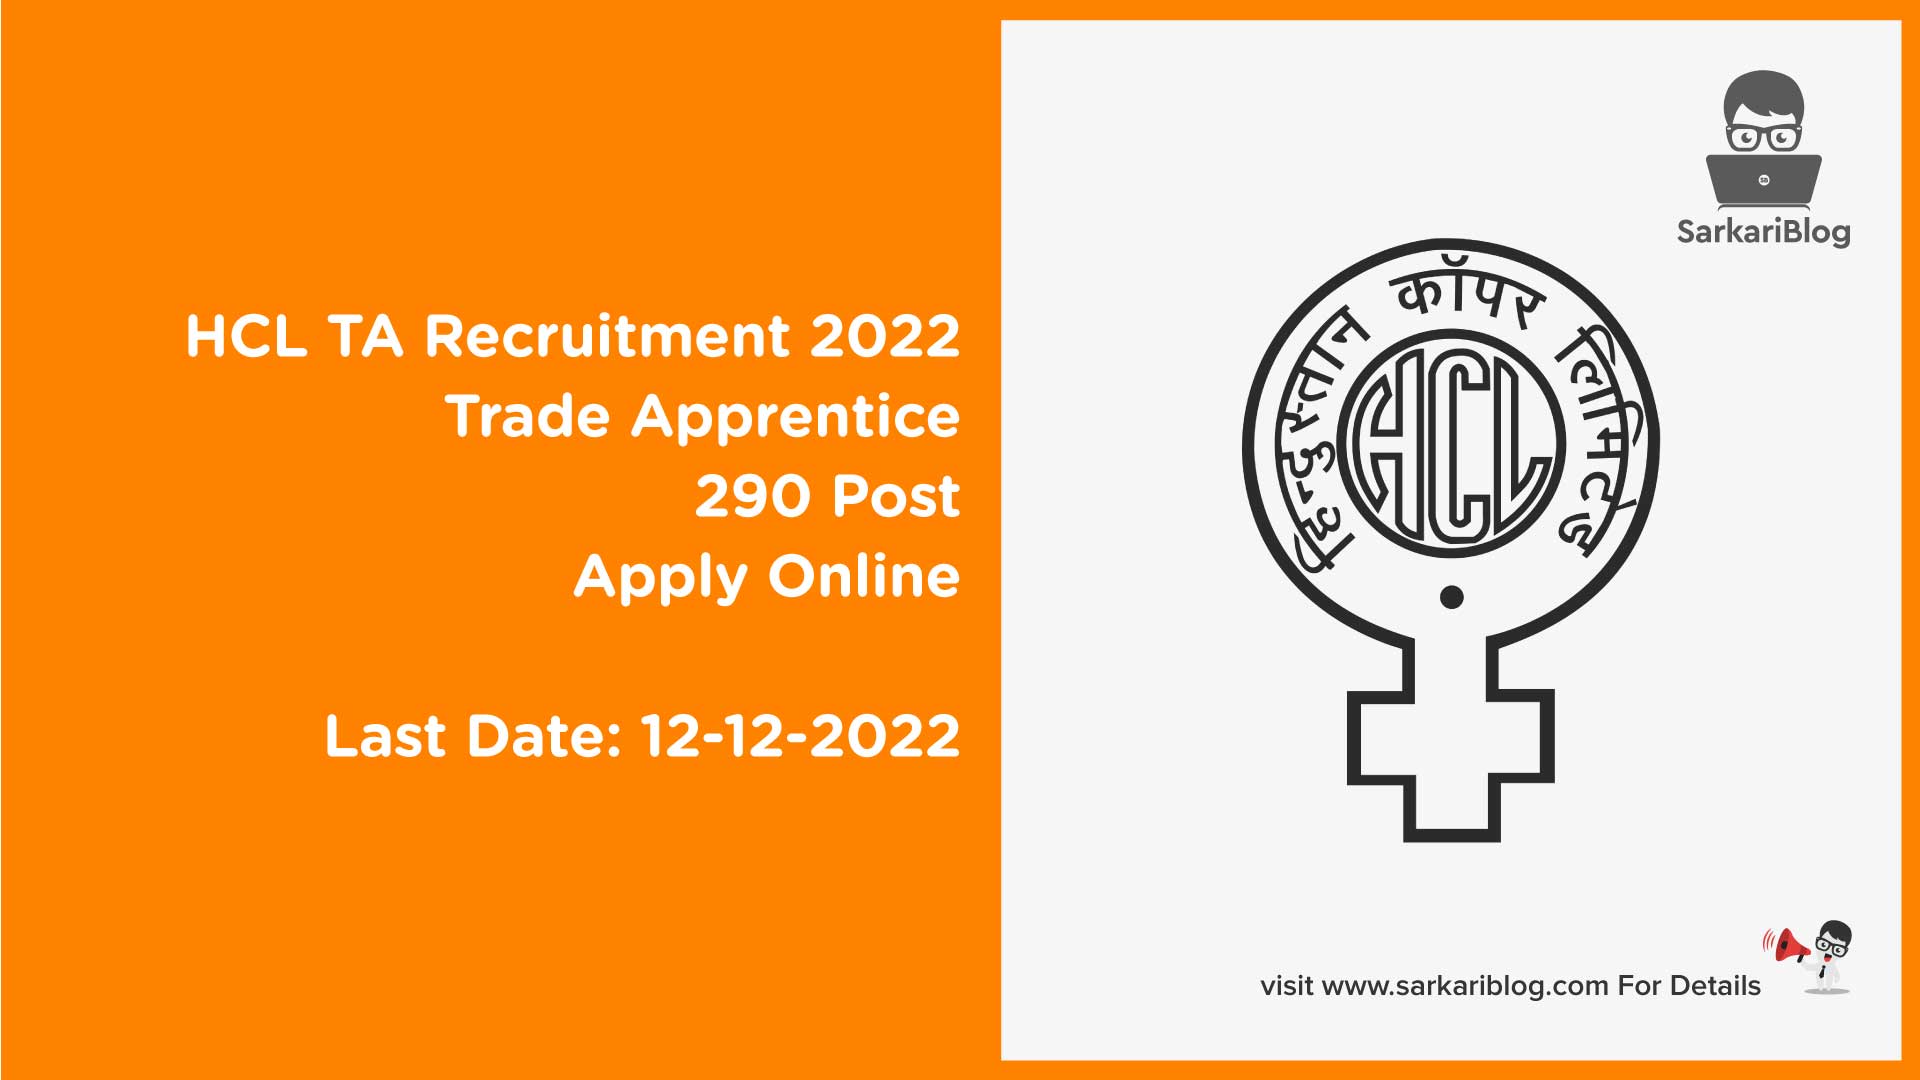 HCL TA Recruitment 2022